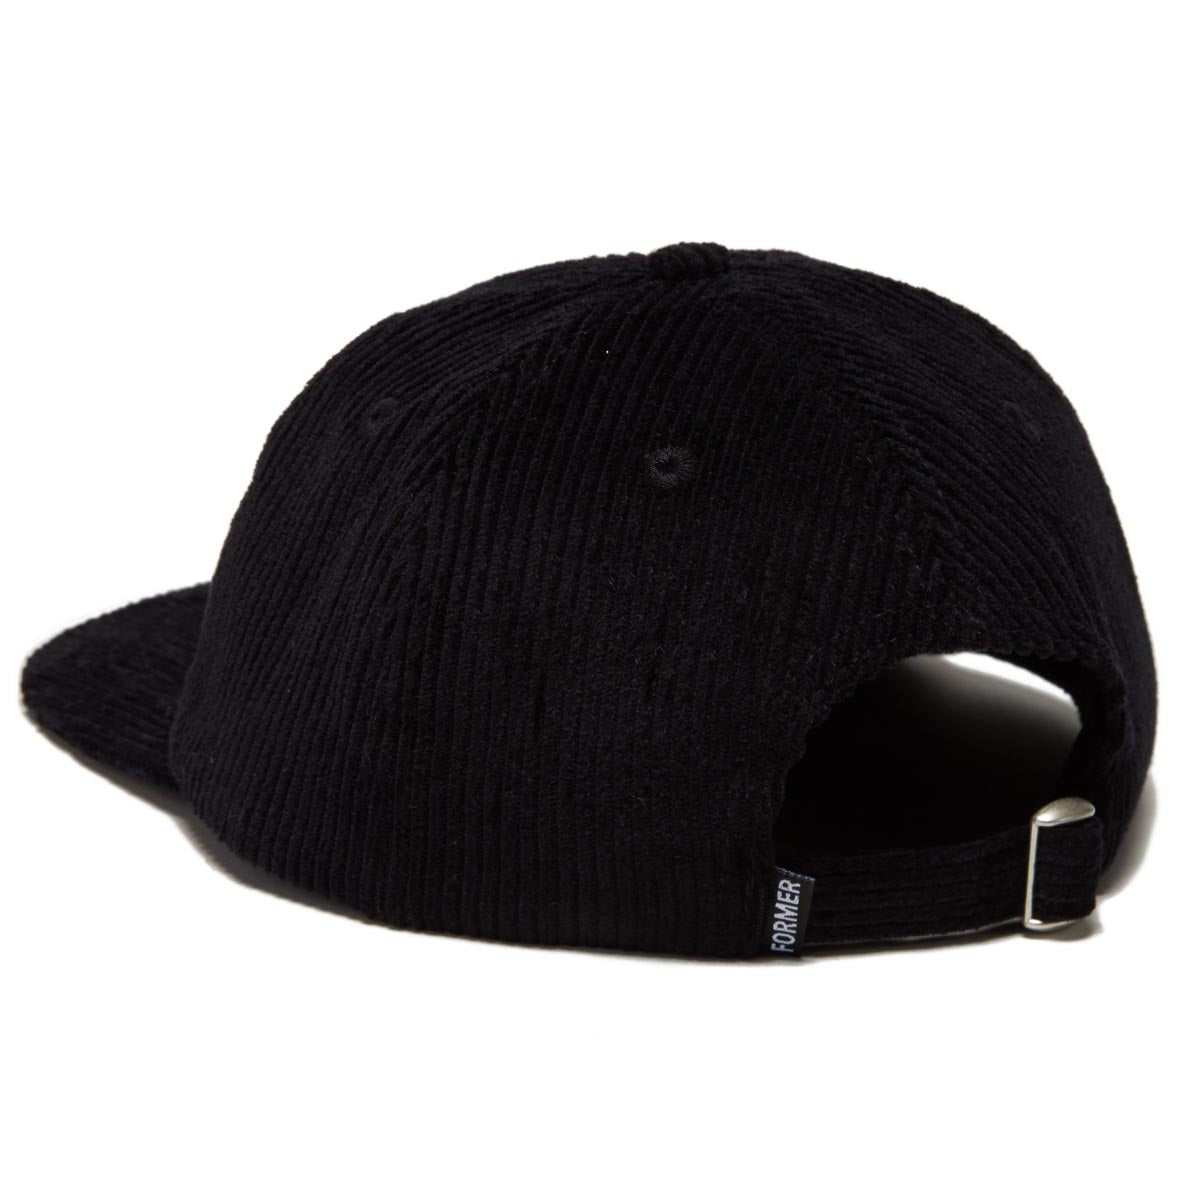 Former Remaining Cord Hat - Black image 2